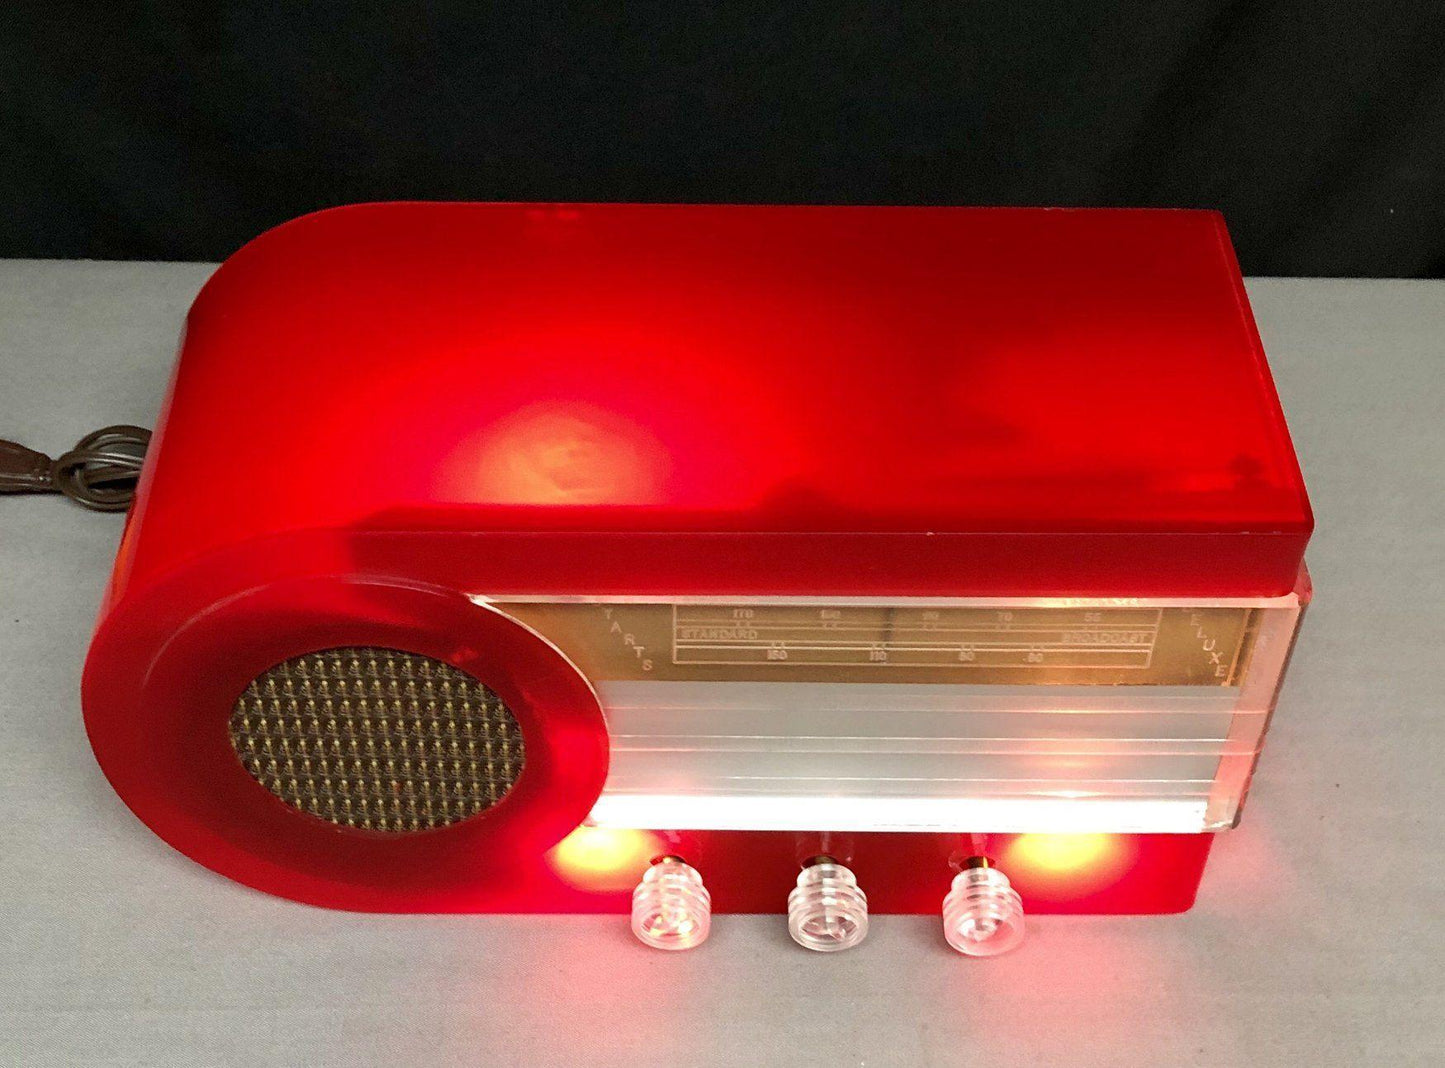 Cyarts B Plastic Radio- Red